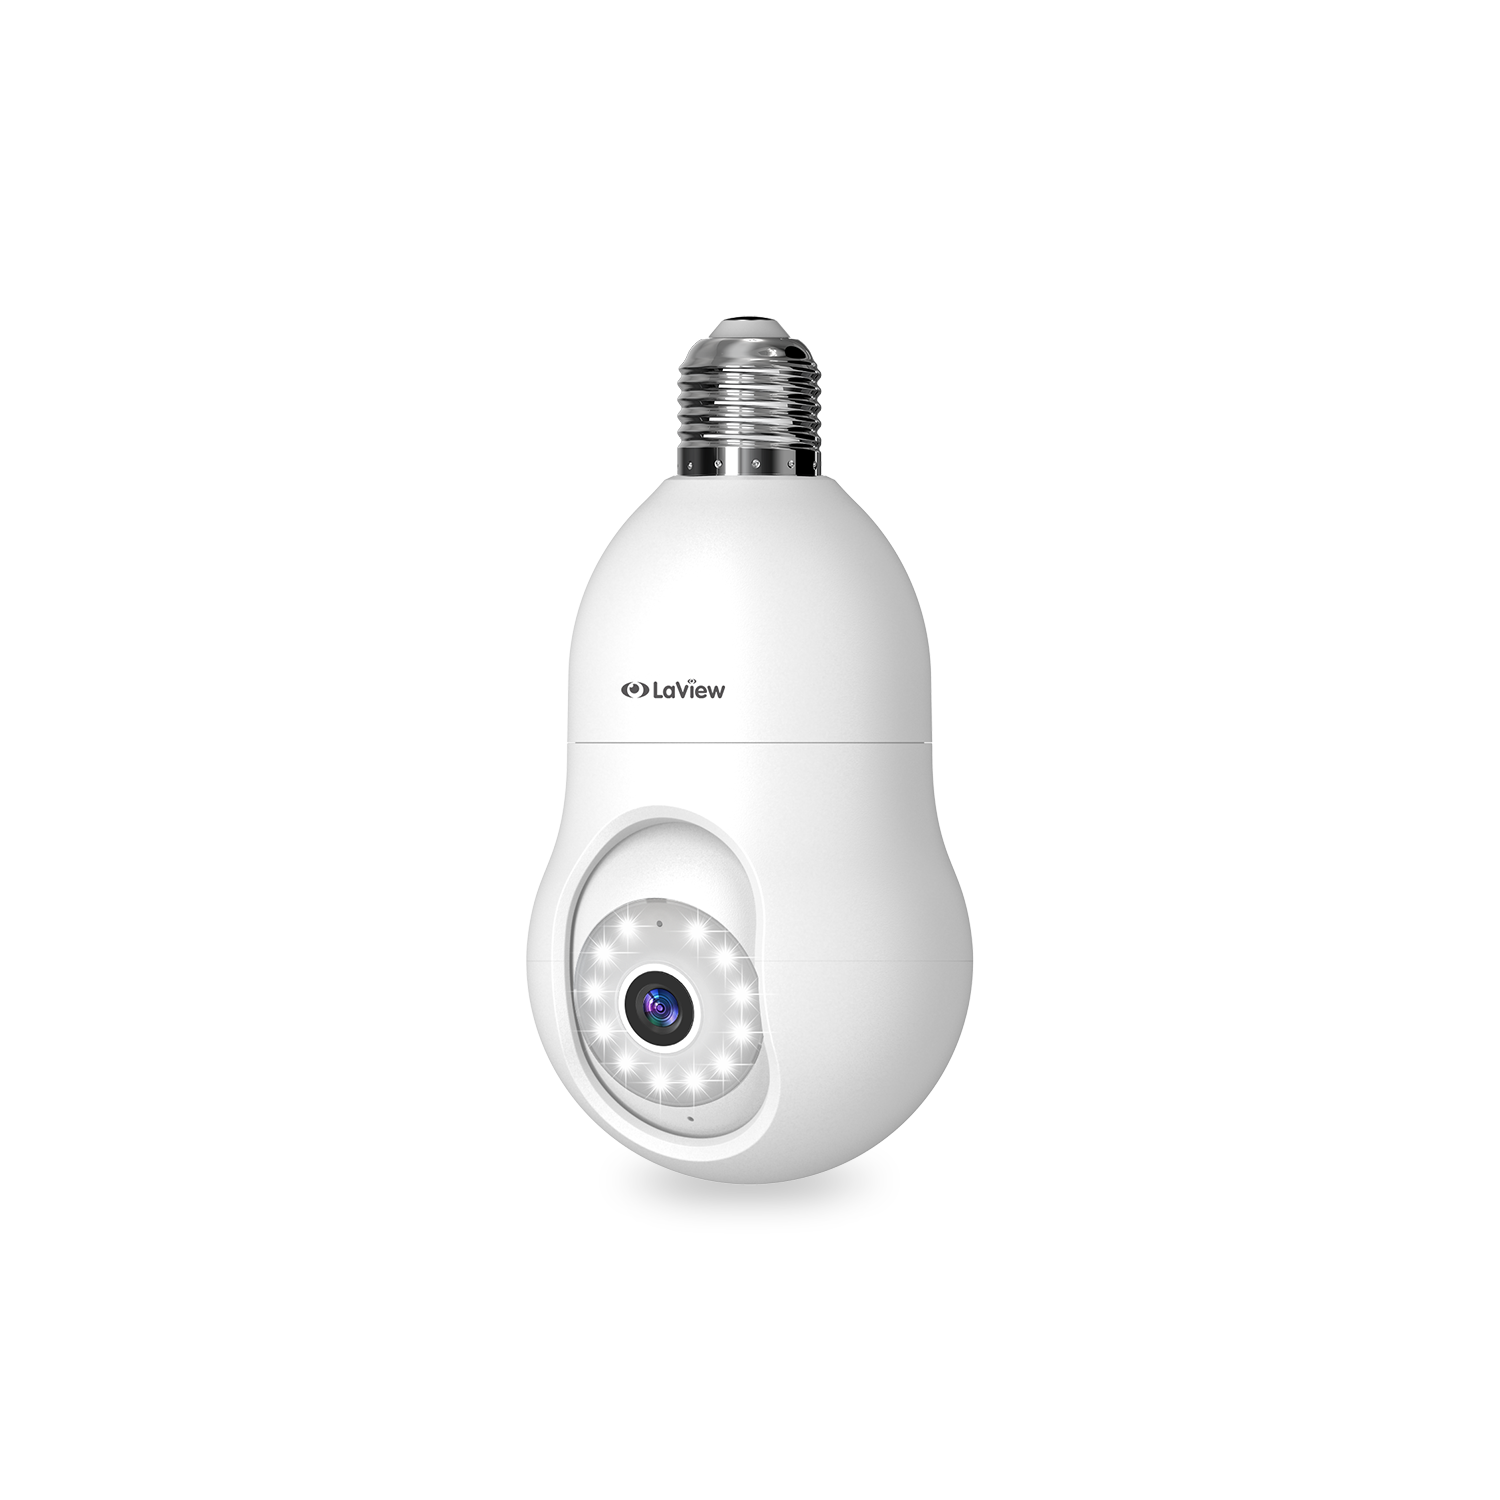 L2 Light Bulb Camera